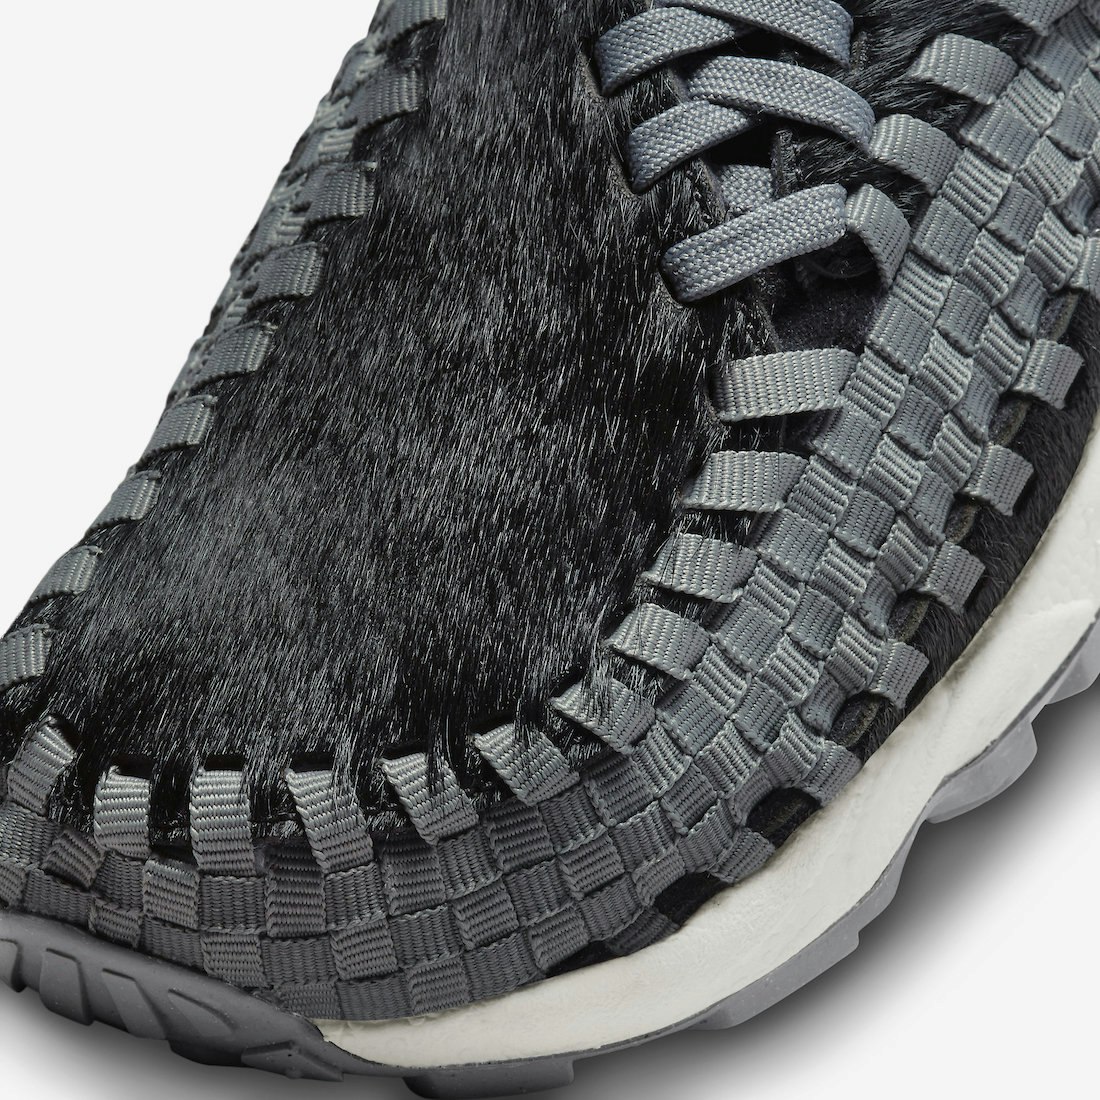 Nike Air Footscape Woven "Black"